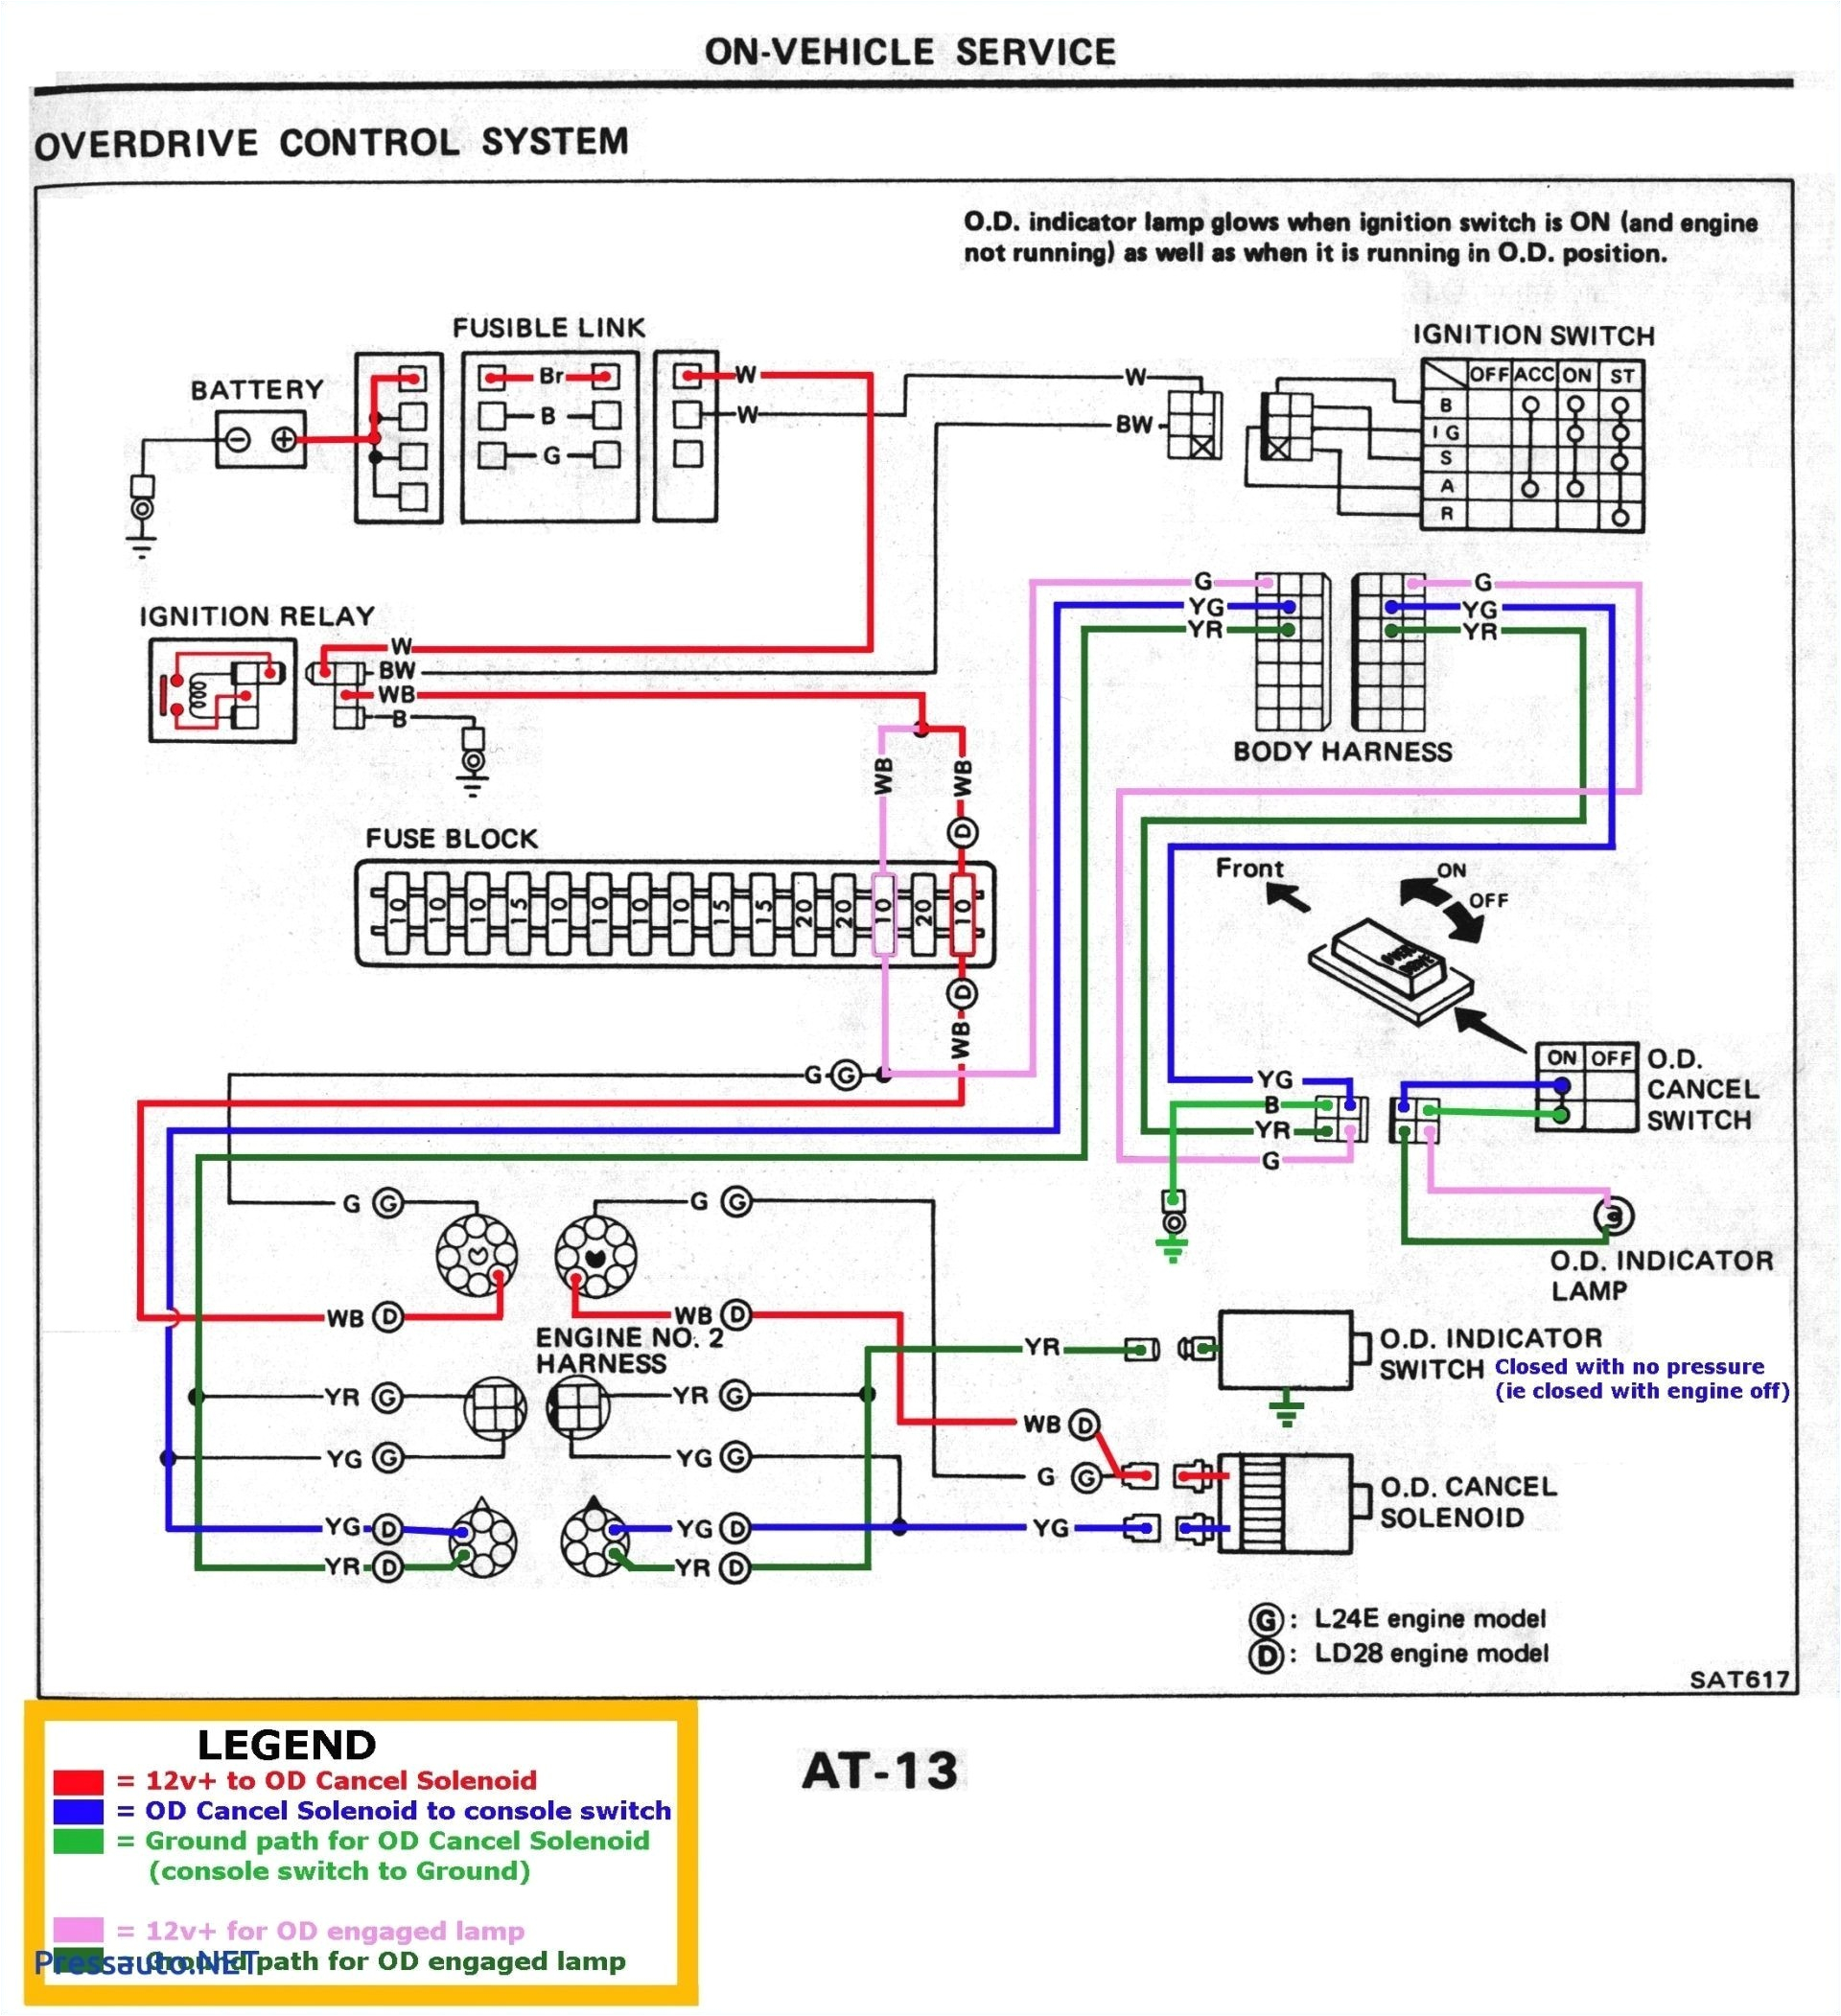 xbox wiring diagrams wiring diagram toolbox xbox 360 wiring diagram wiring diagrams sapp xbox wiring diagrams